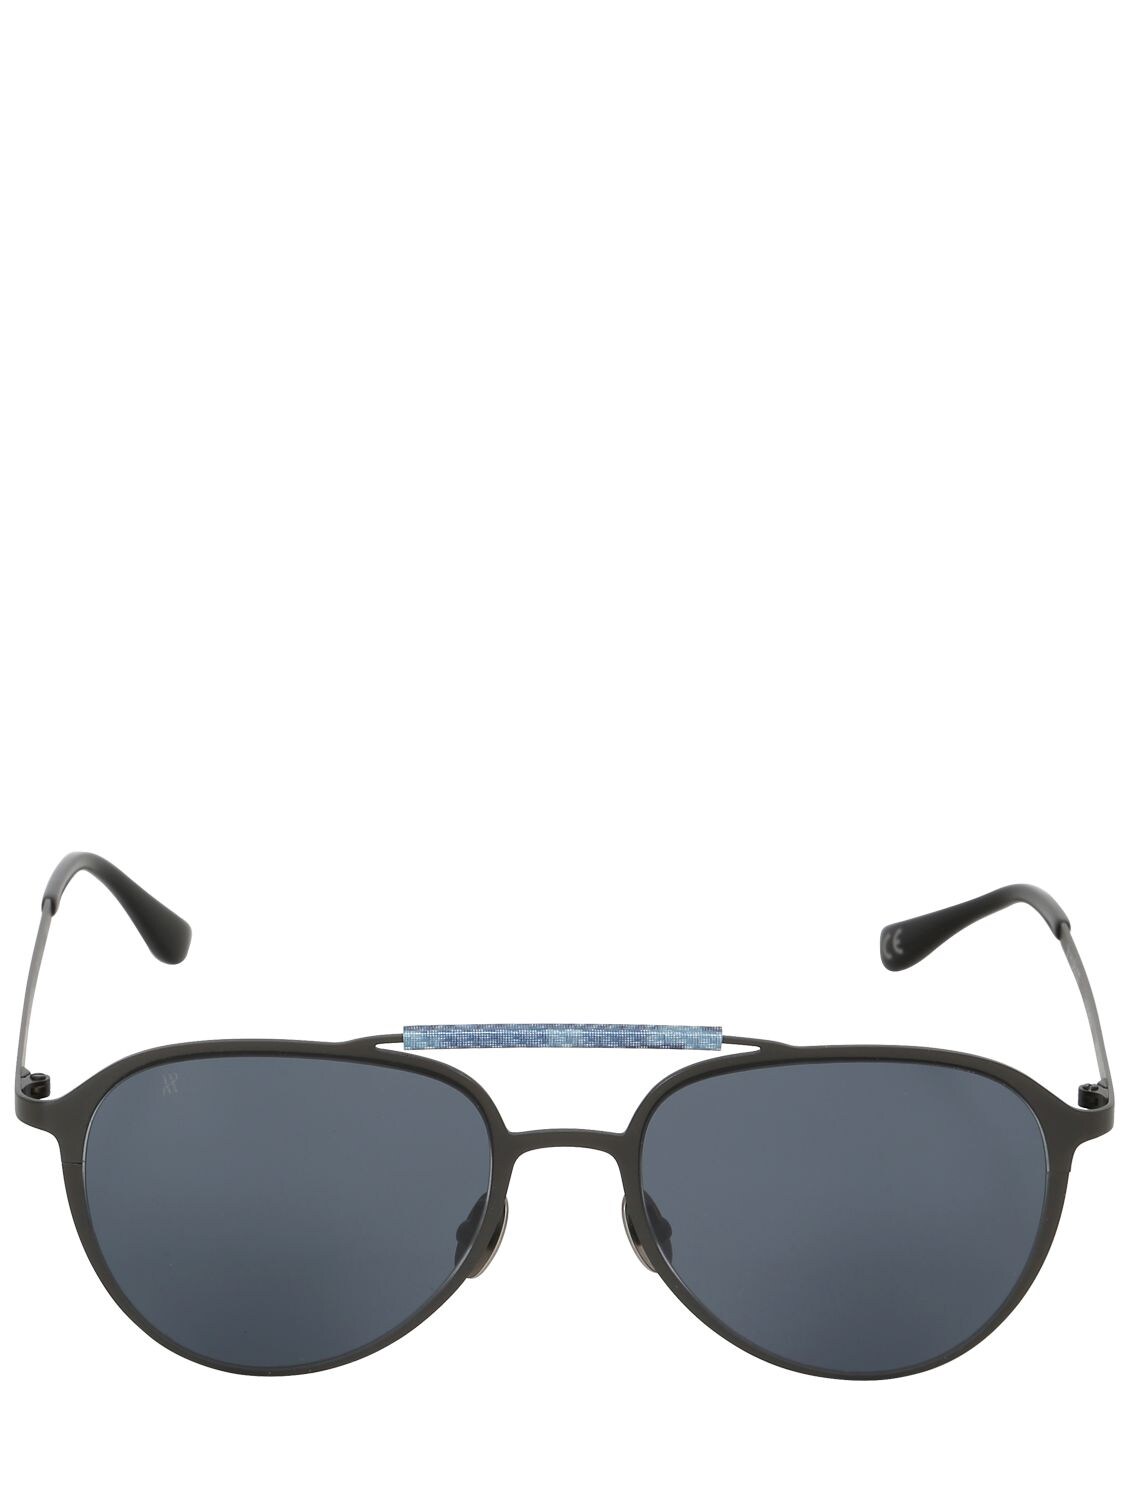 Hublot Italia Independent Blue Camo Gunmetal Aviator Sunglasses